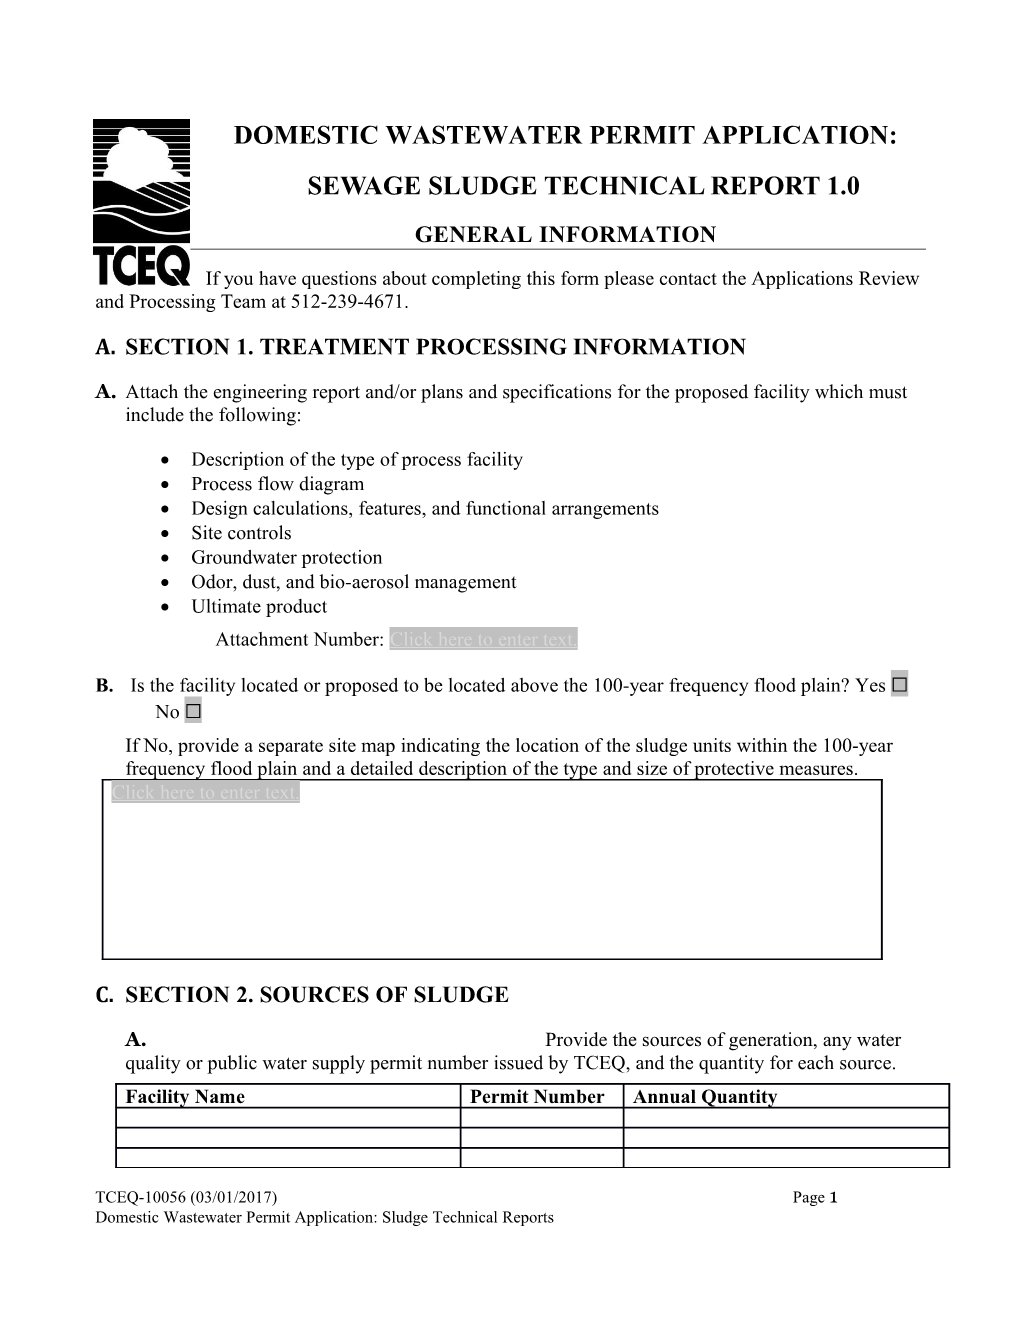 Sewage Sludge Technical Report 1.0